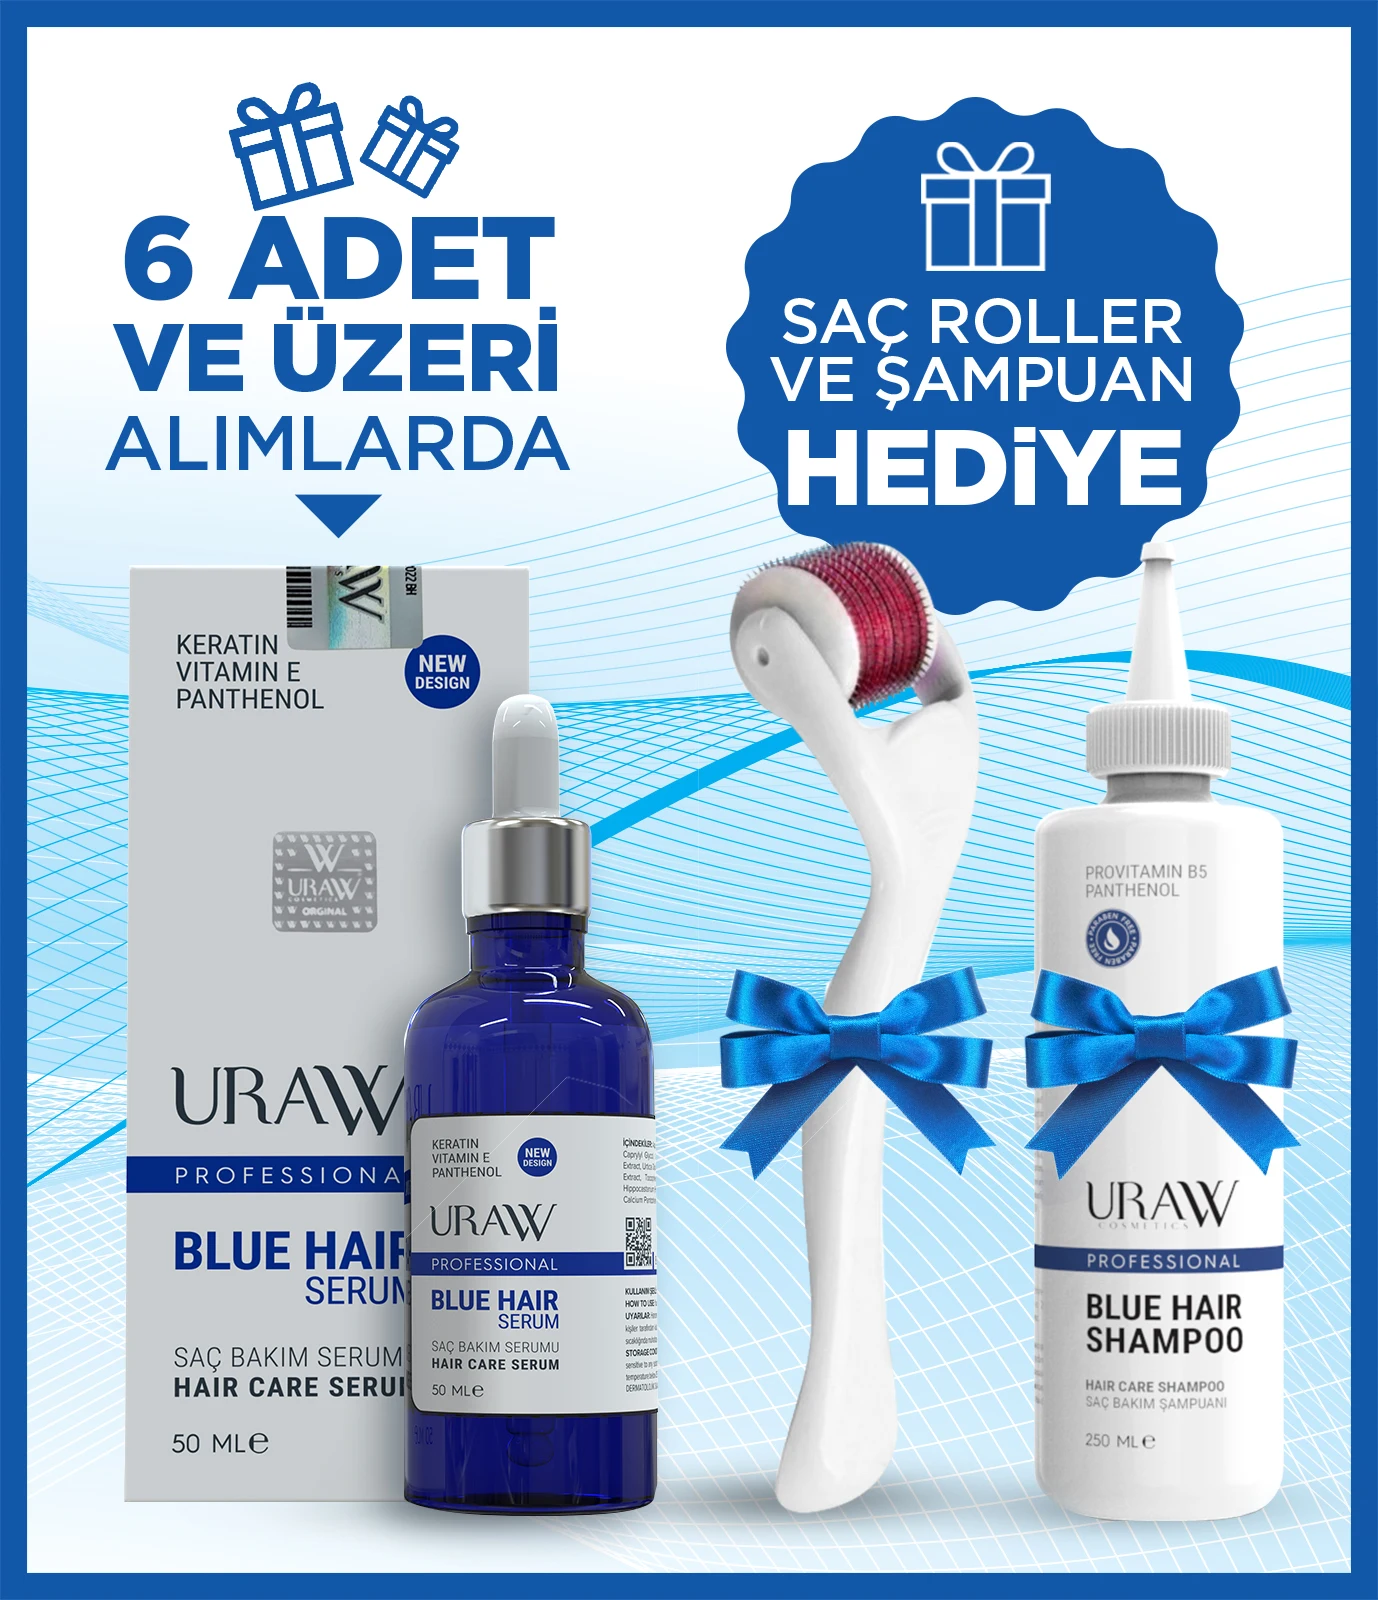 

URAW Blue Hair SERUM 50 ml (Blue SERUM) 100 Hologram original strengthens hair which ensures the repairs to loss growth support